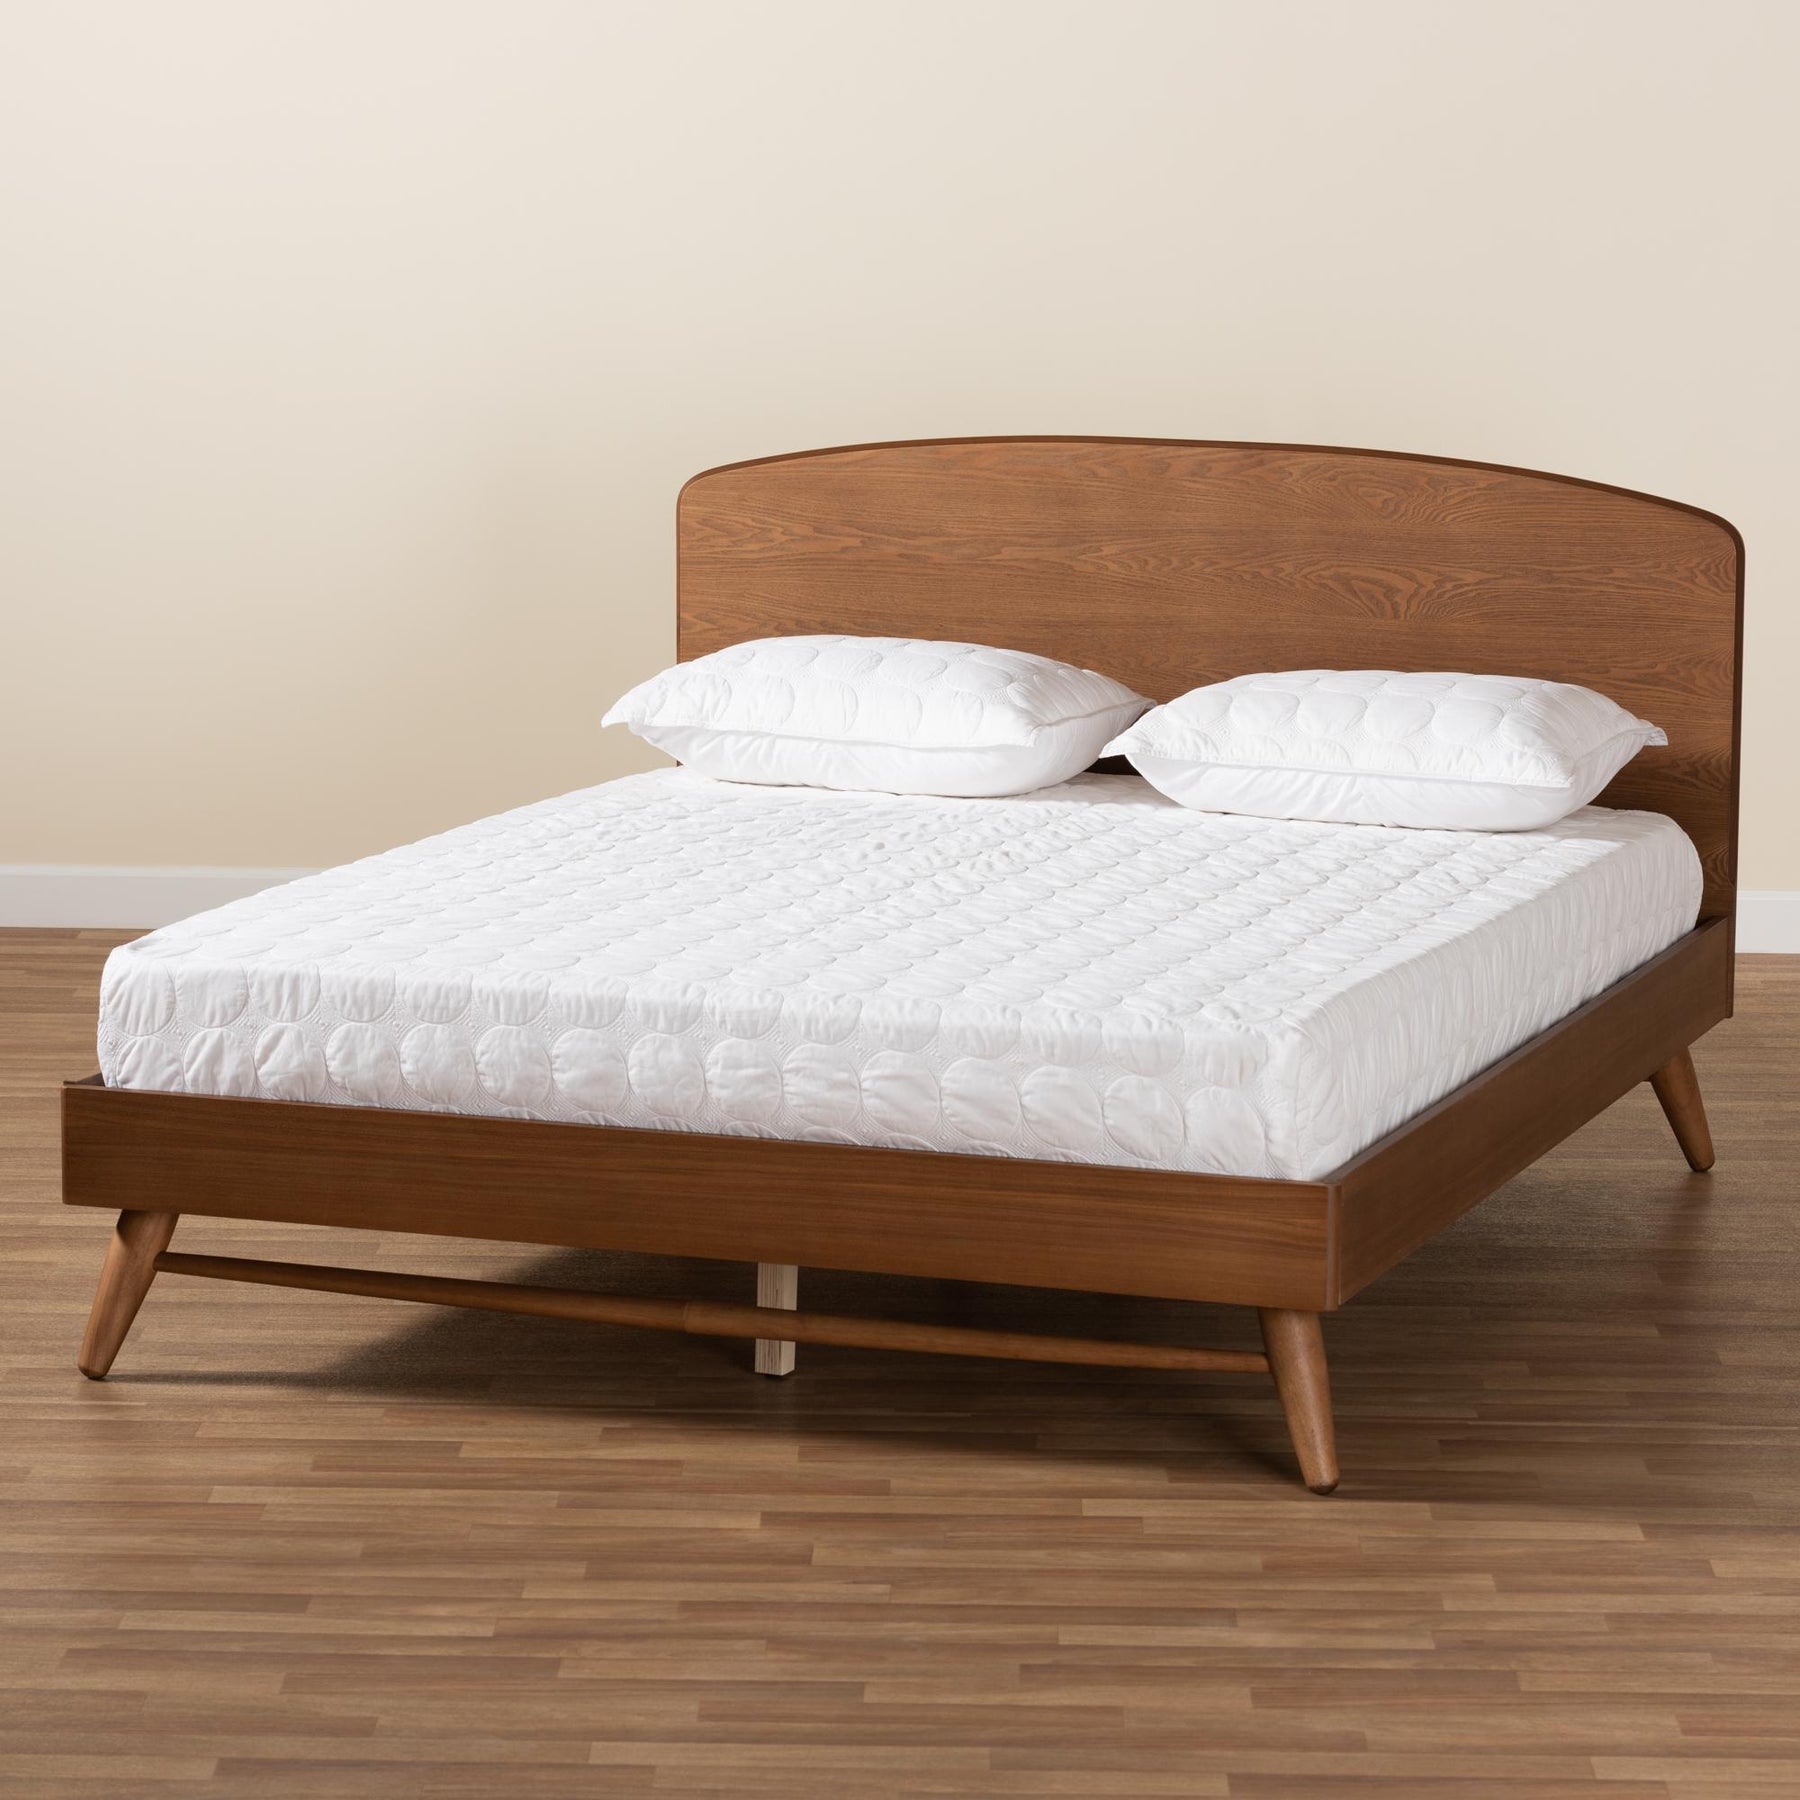 Baxton Studio Keagan Mid-Century Modern Transitional Walnut Brown Finished Wood King Size Platform Bed - MG-2200-1-Ash Walnut-King